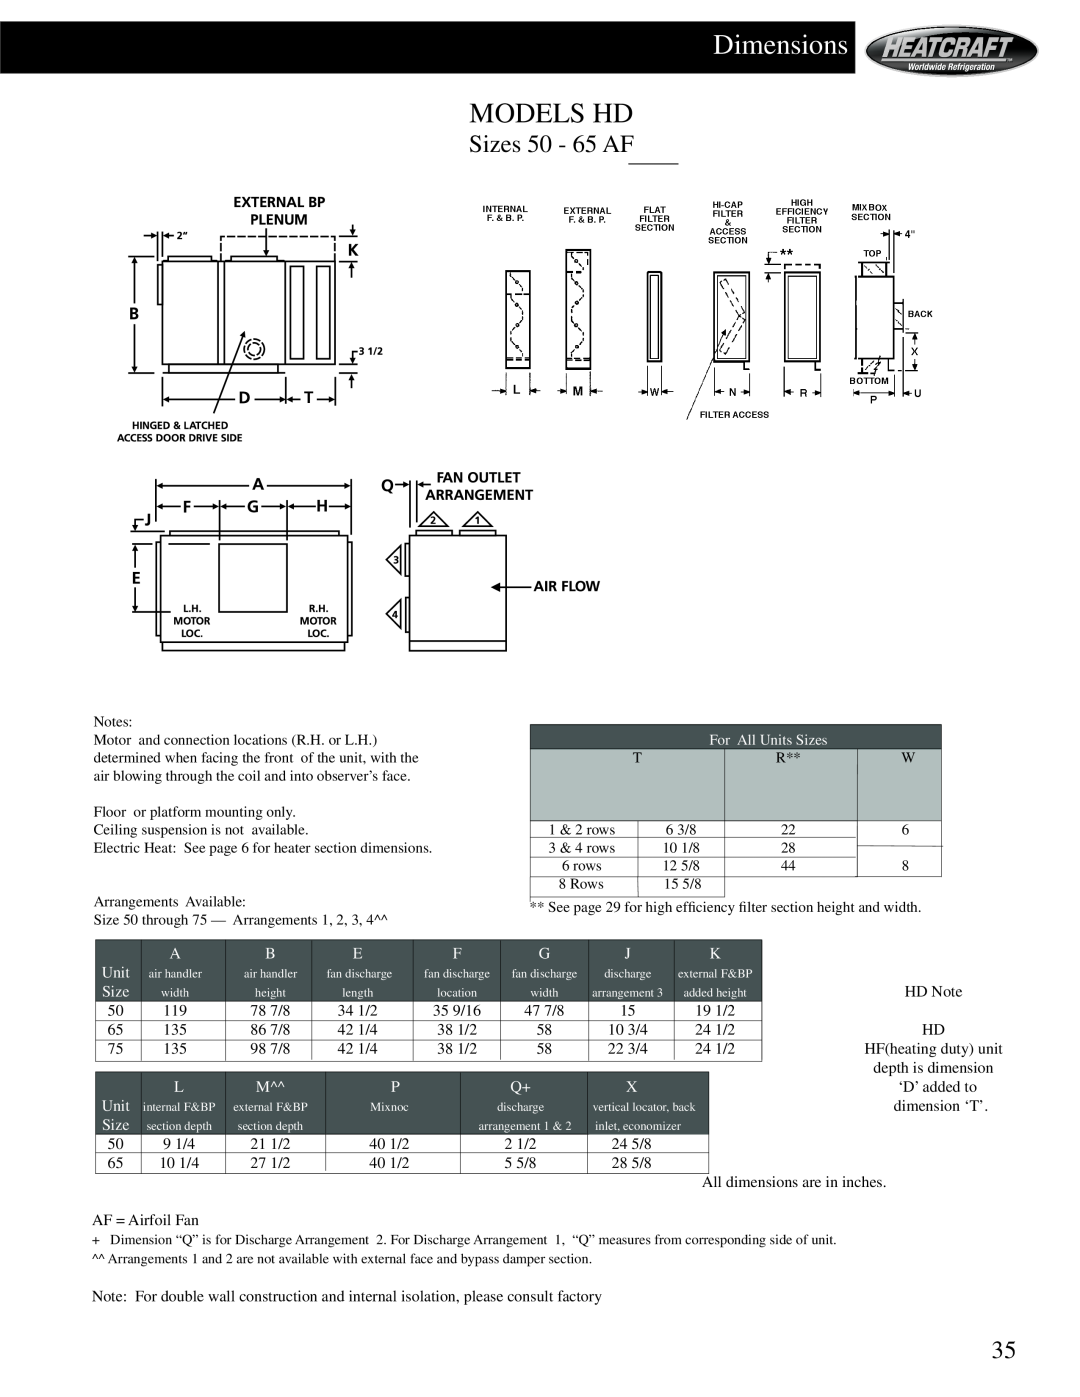 Heatcraft Refrigeration Products HCS manual Models Hd, Sizes 50 - 65 AF, Dimensions 